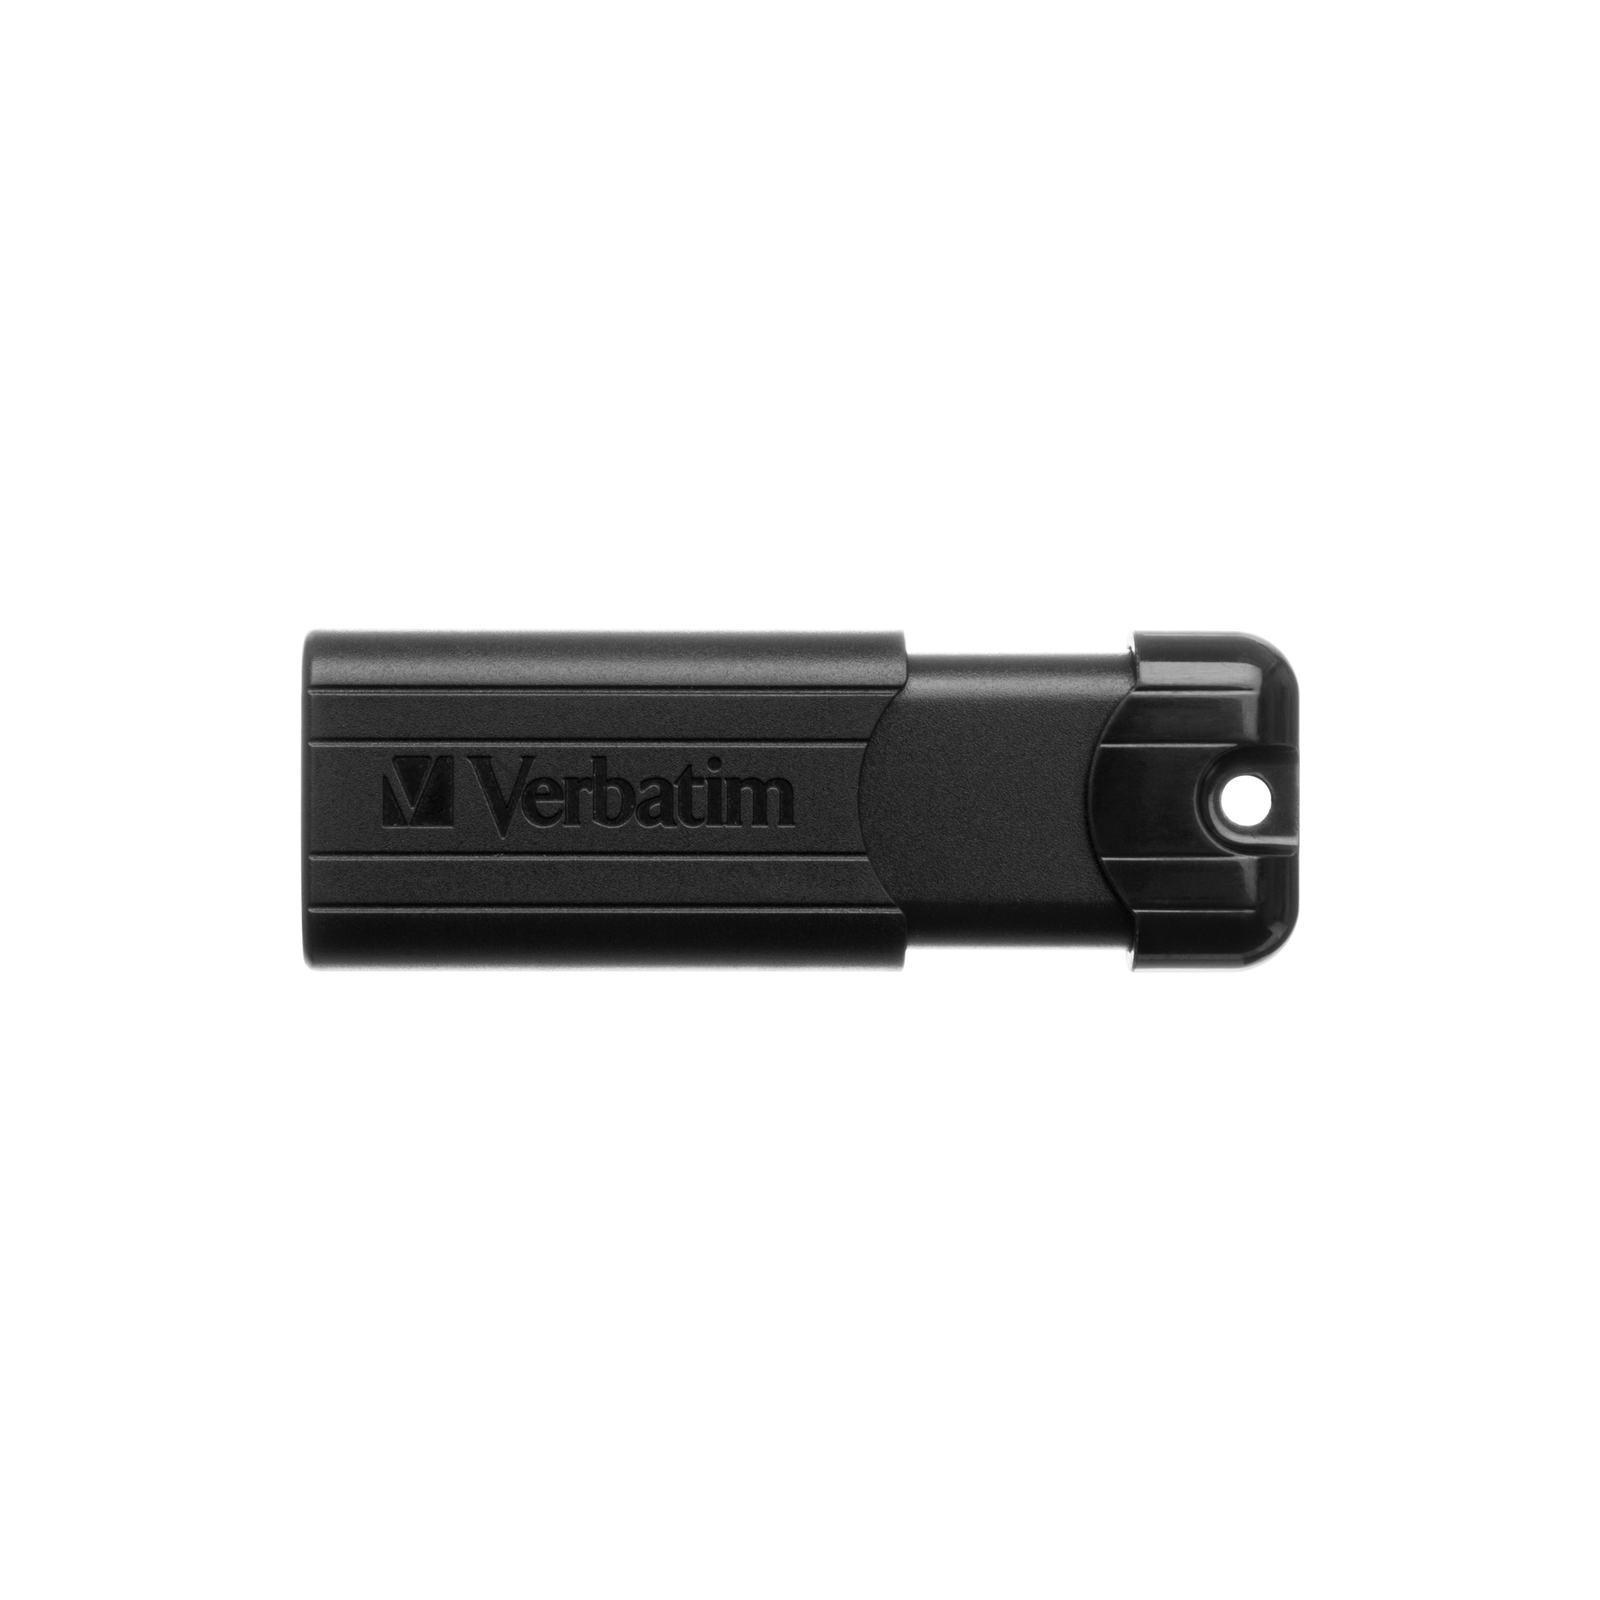 USB флеш накопитель Verbatim 256GB PinStripe Black USB 3.0 (49320)